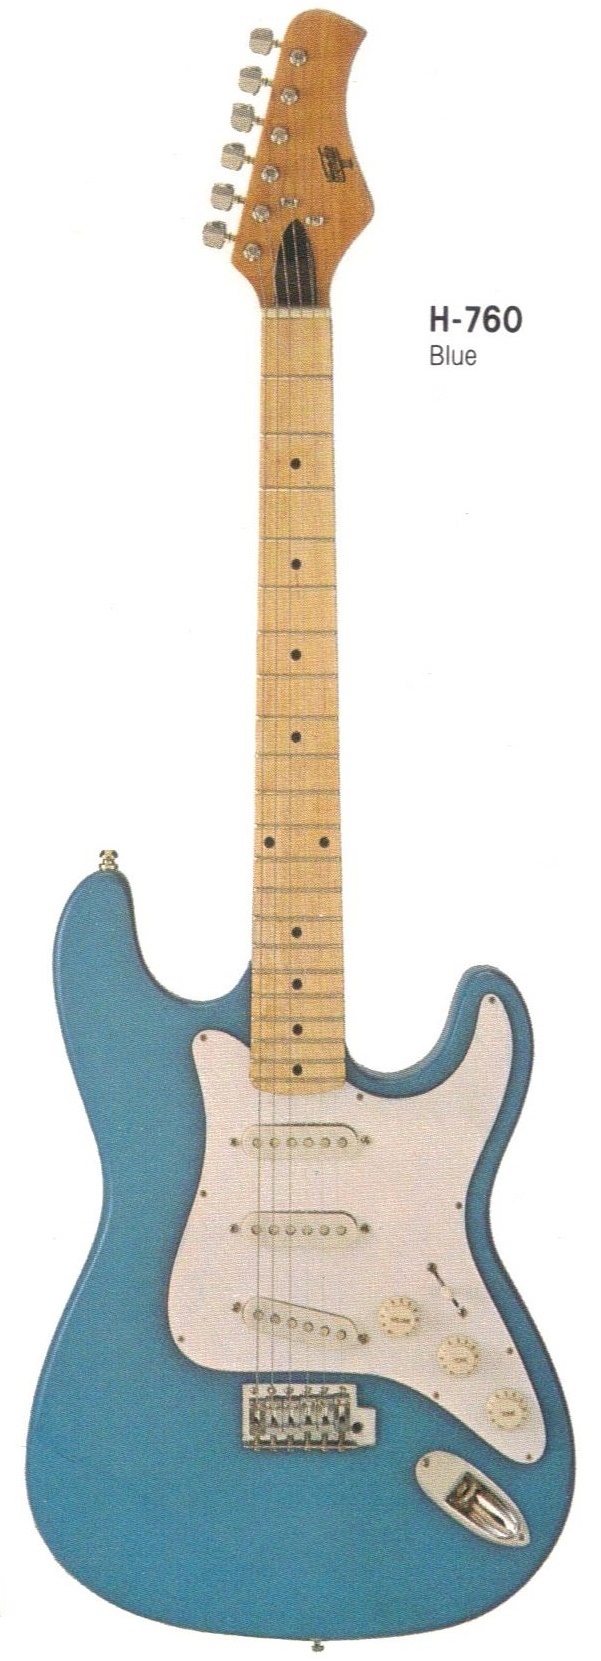 Hondo Guitar Serial Number Lookup